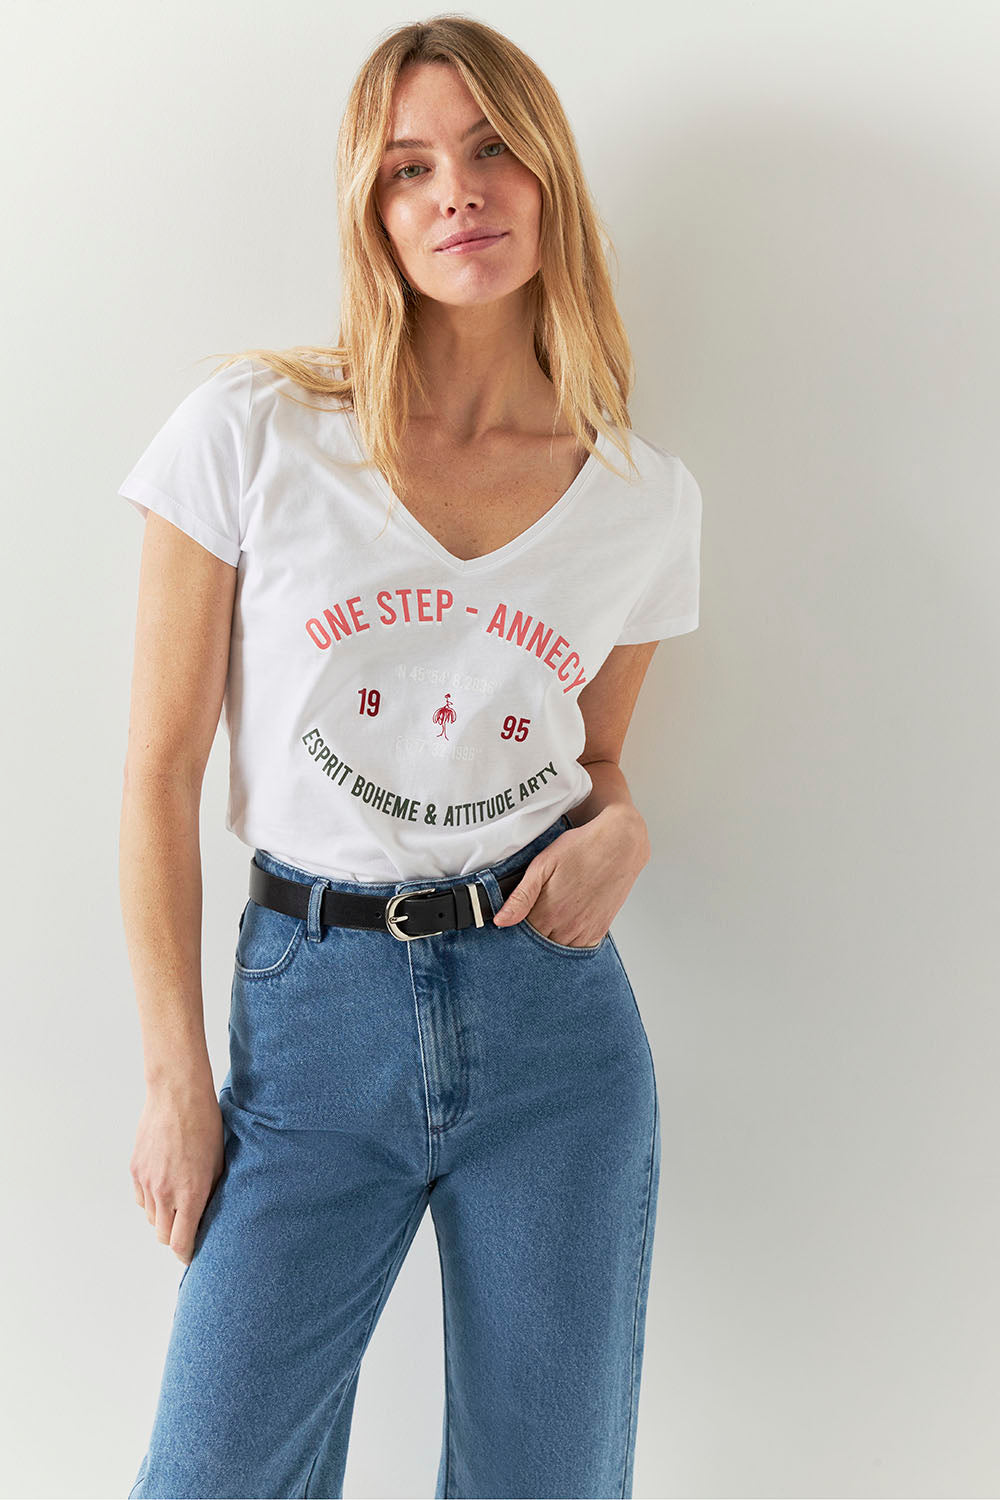 MOOR - T-shirt blanc à message - Annecy